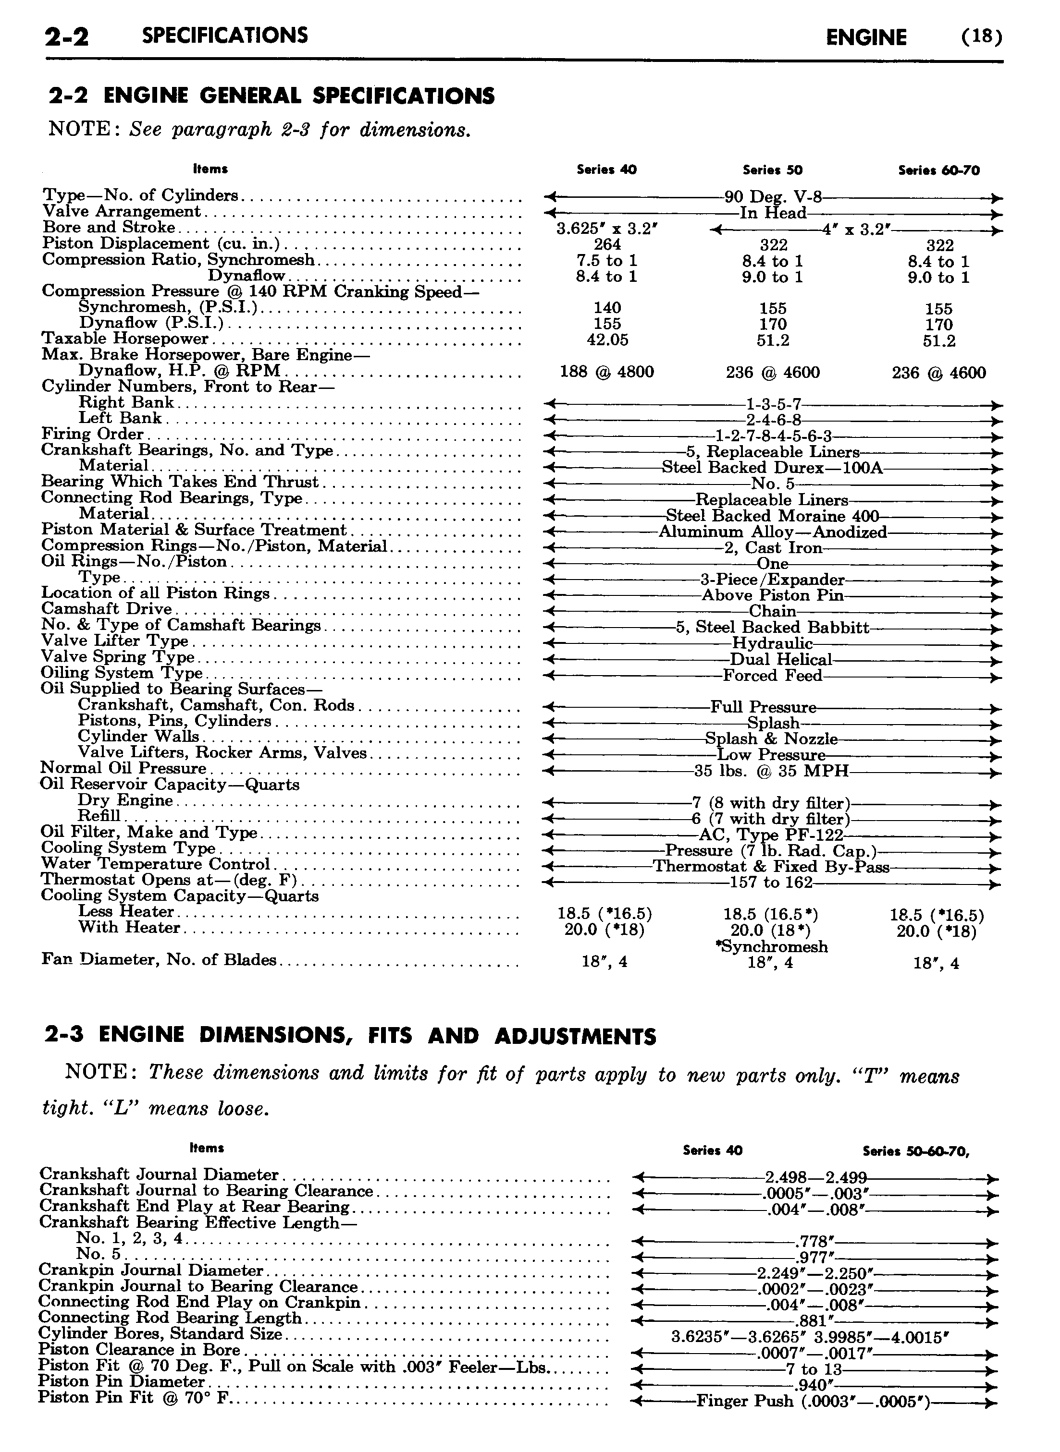 n_03 1955 Buick Shop Manual - Engine-002-002.jpg